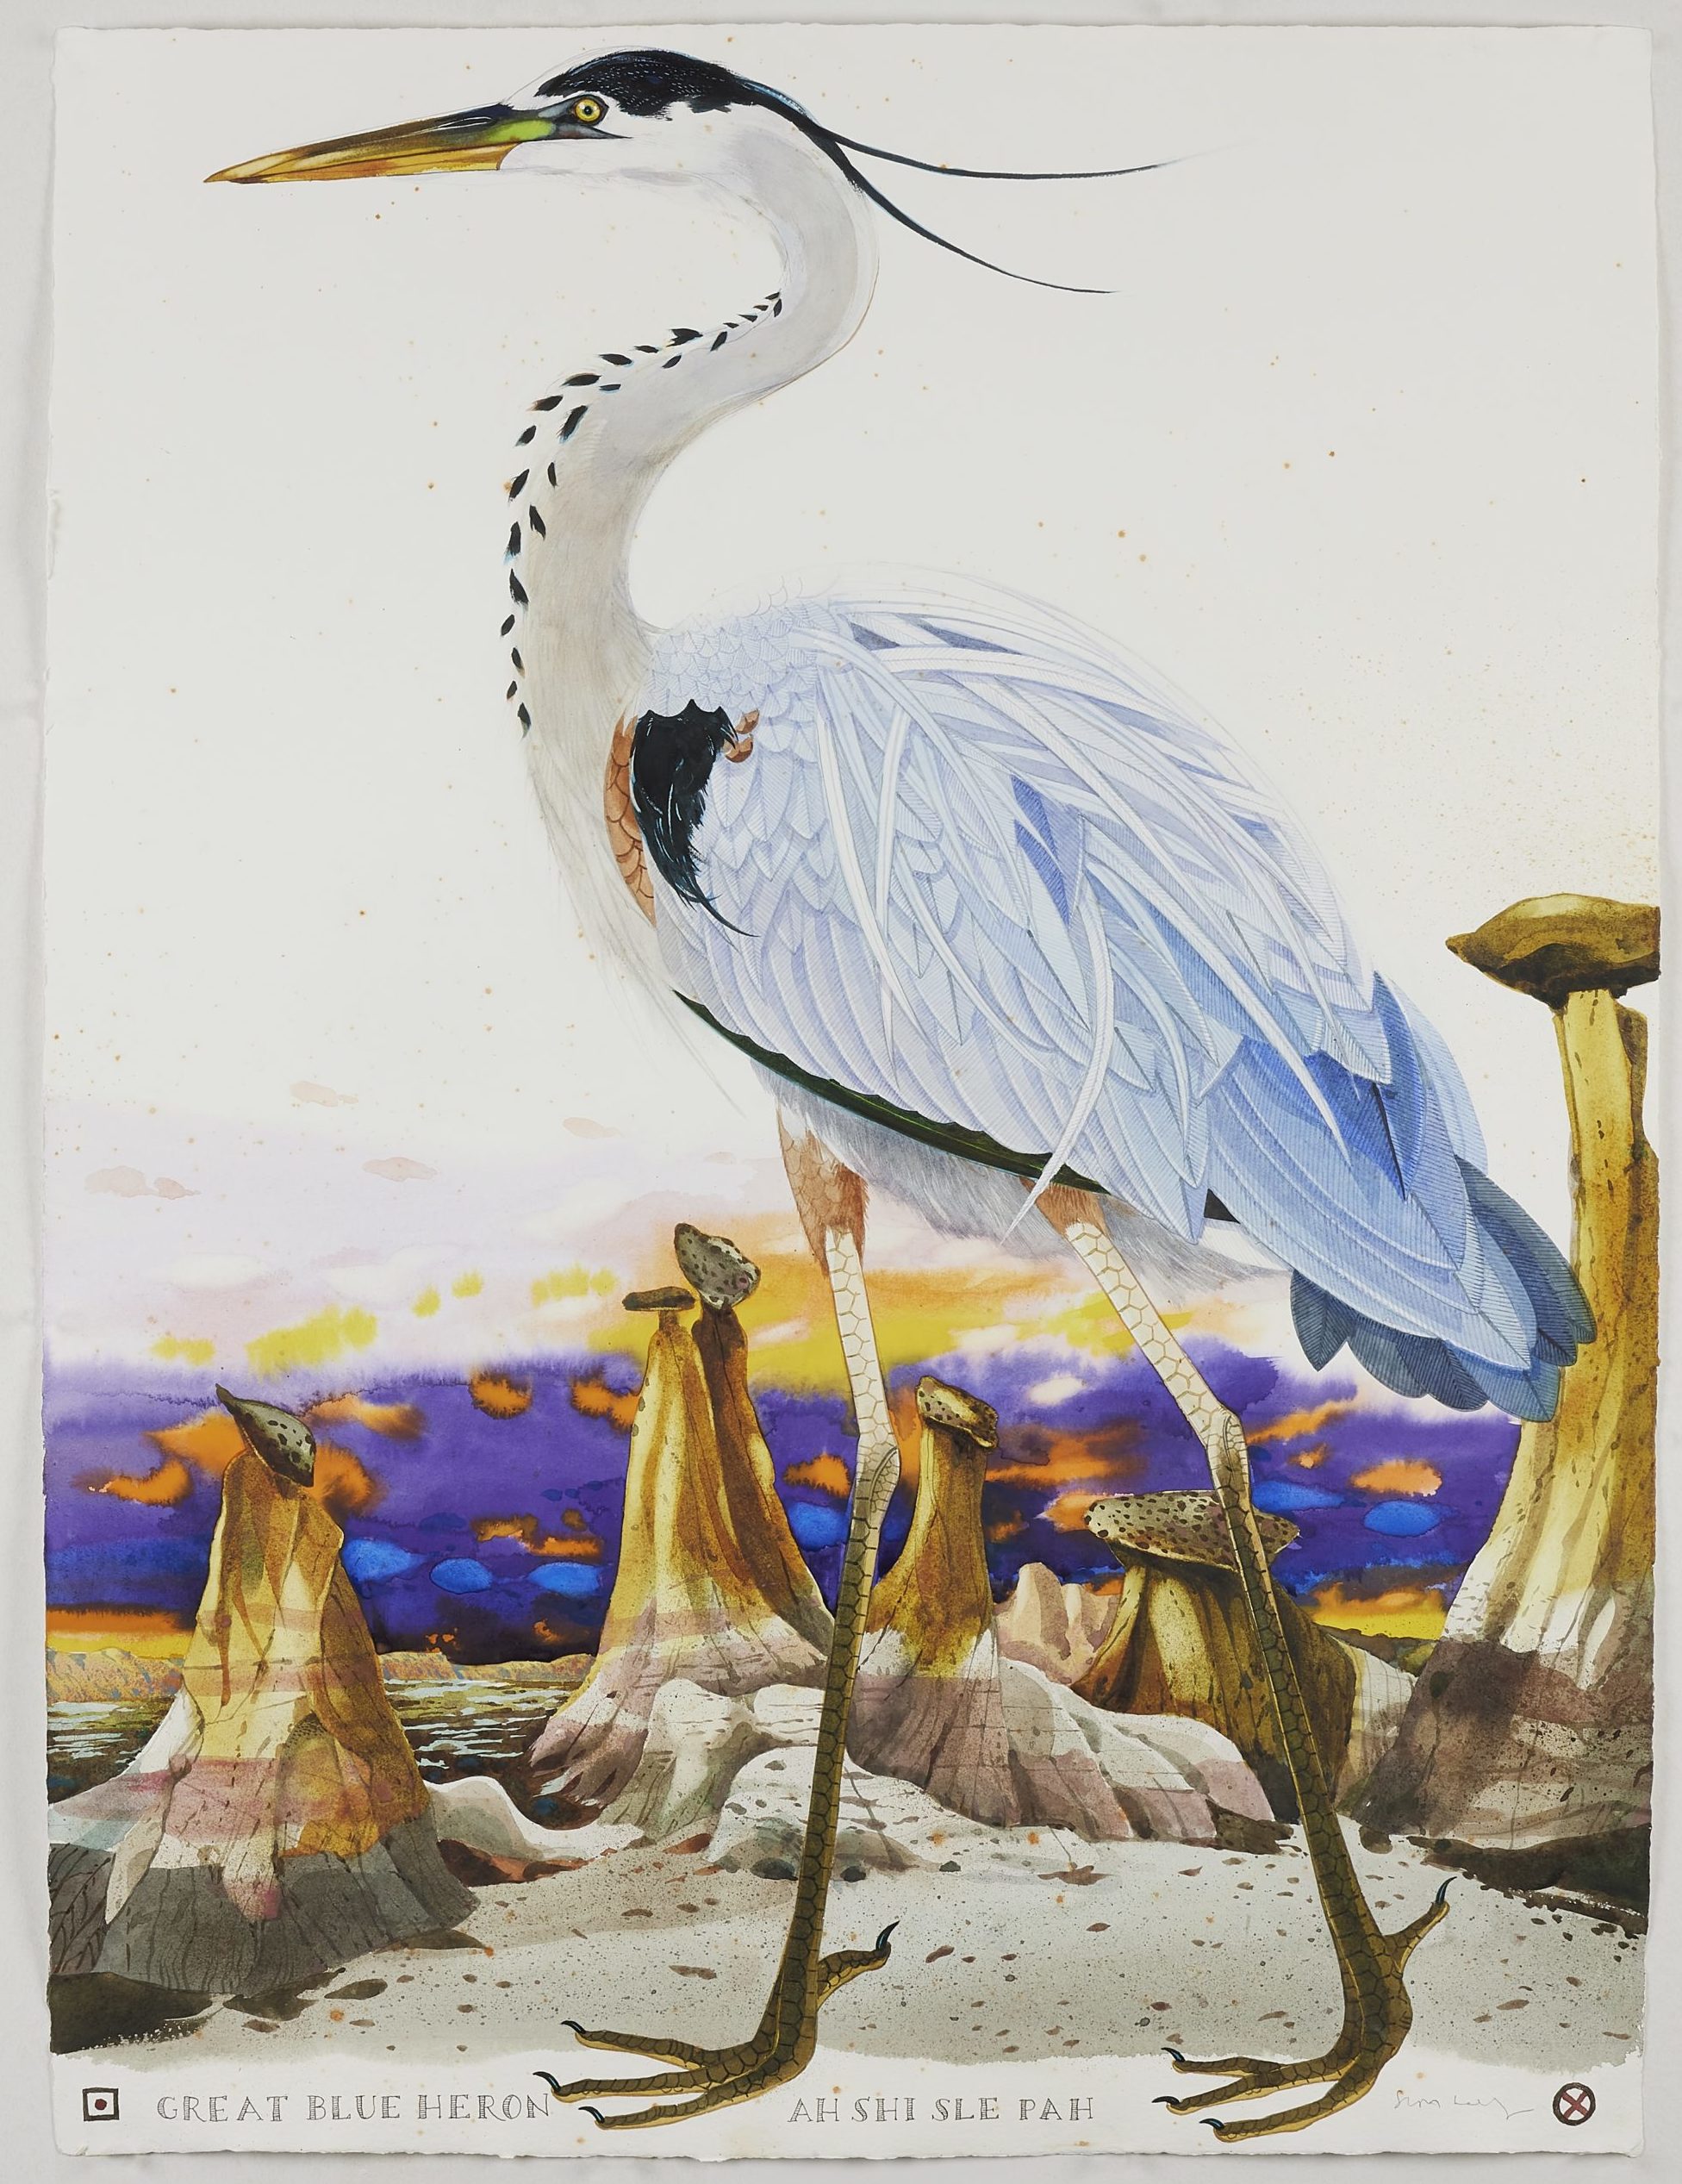 

											Scott Kelley</b>

											<em>
												Gray Salt - Lost in Ah-Shi-Sle-Pah </em> 

											<h4>
												June 25 - July 24, 2021											</h4>

		                																																													<i>Great Blue Heron, Ah-Shi-Sle-Pah,</i>  
																																								2020-2021, 
																																								watercolor, gouache and ink on paper, 
																																								40 x 30 inches 
																								
		                				